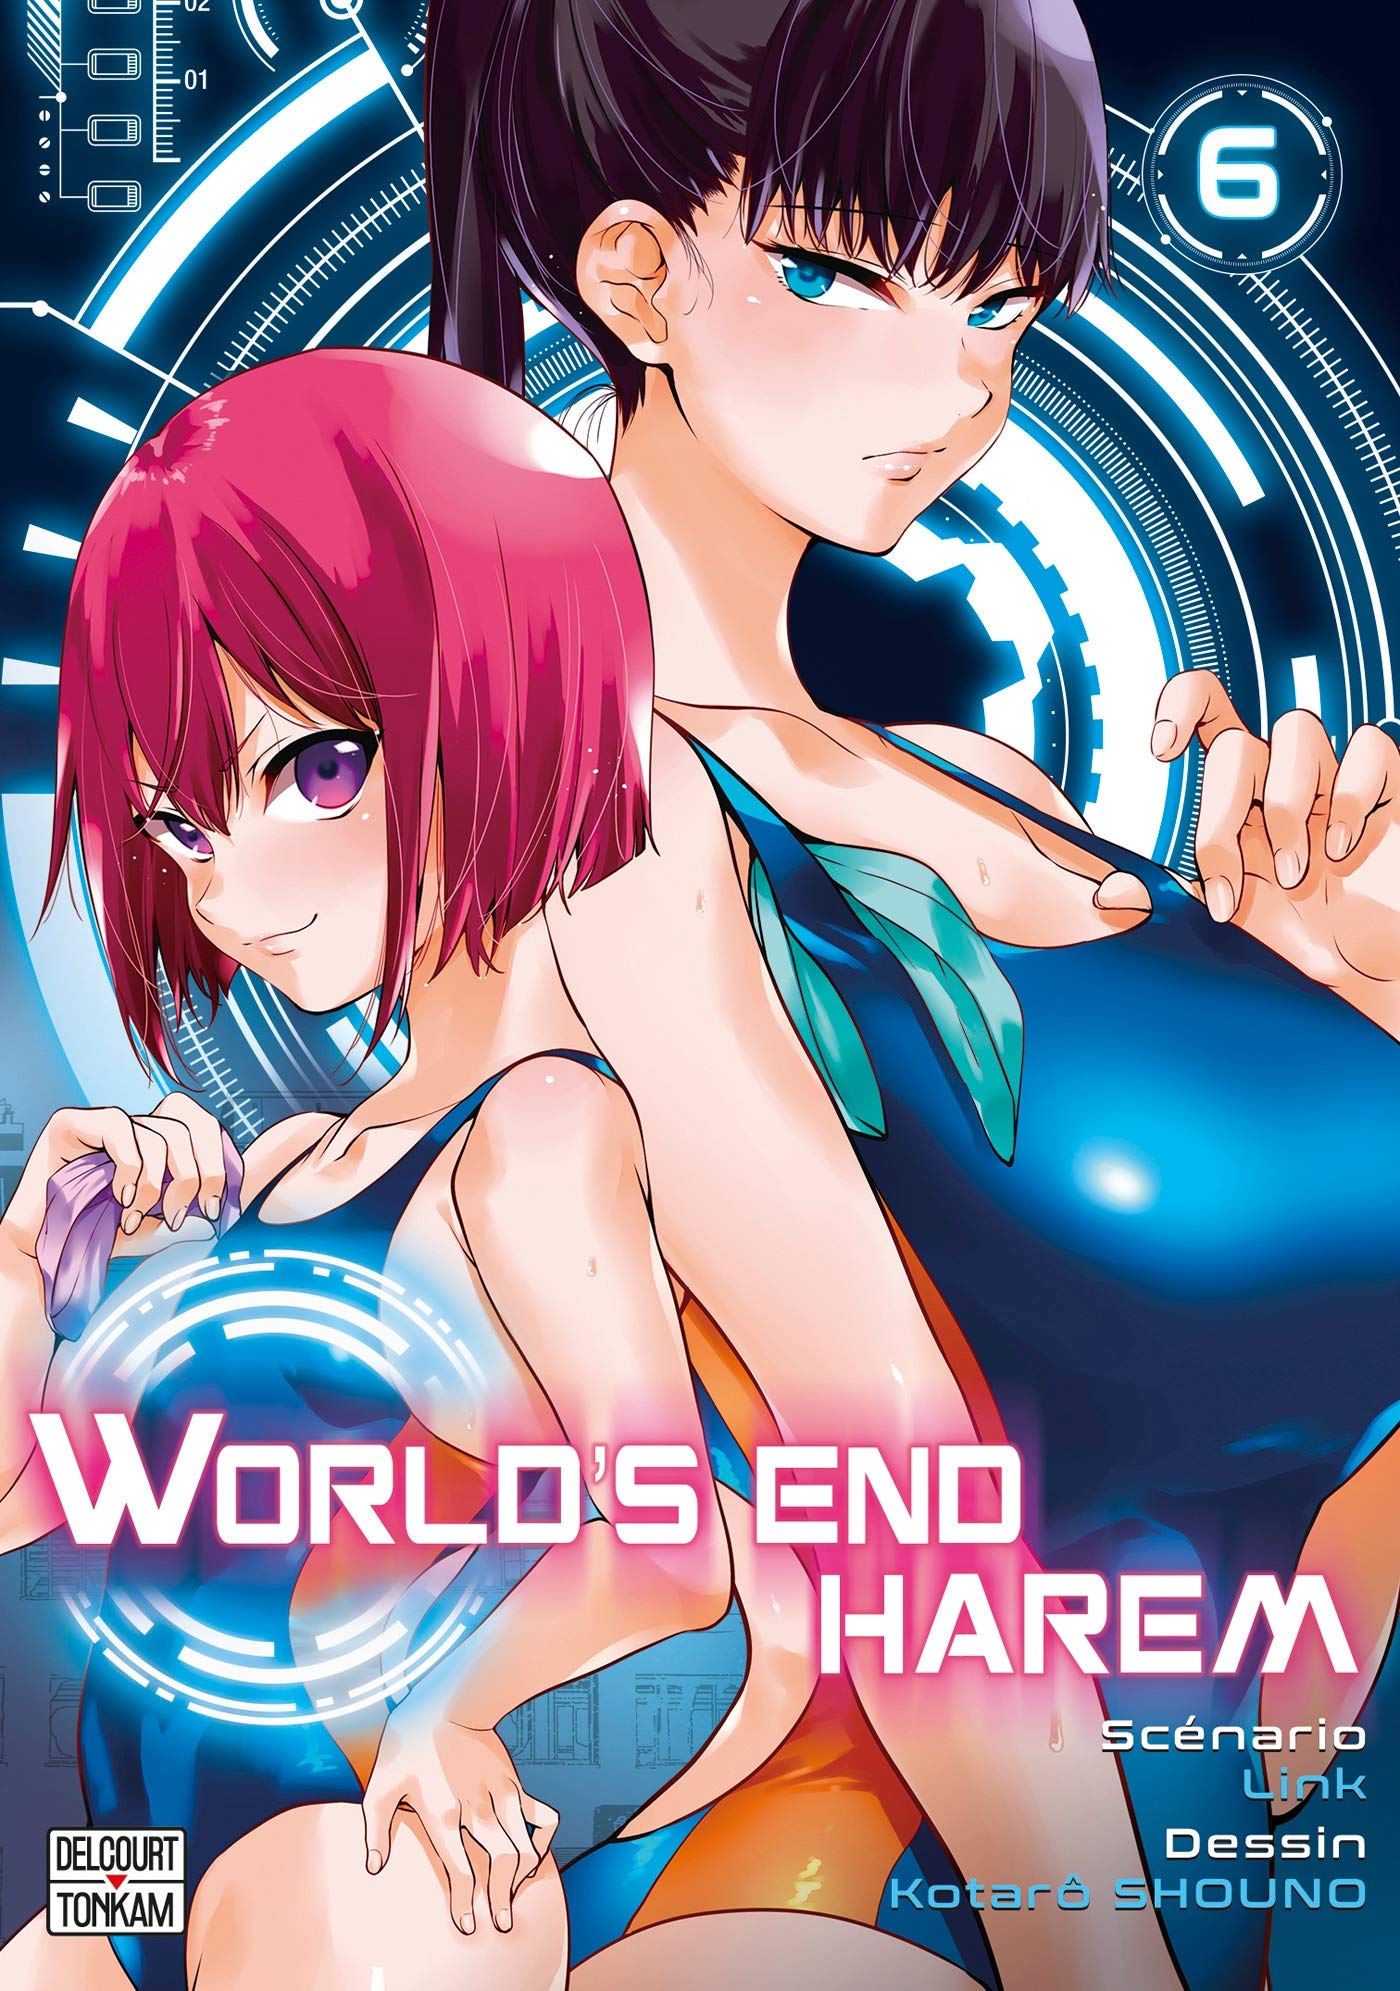 WORLDS END HAREM - ANIME 11x17 POSTER PRINT #1